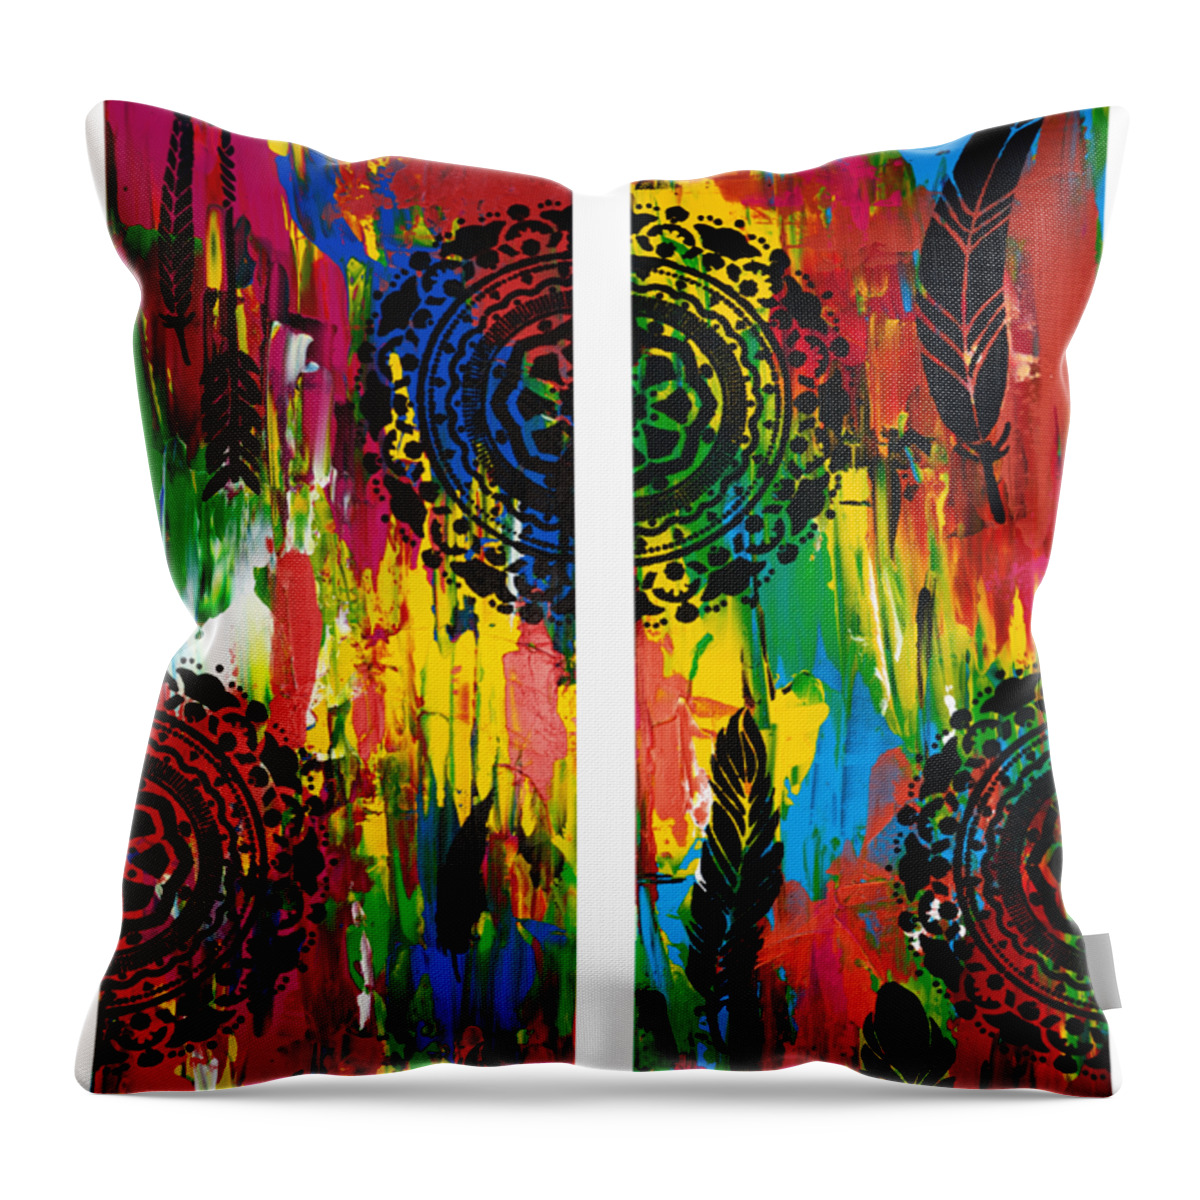 Abstract Boho Design Throw Pillow featuring the painting Abstract Boho Design - Diptych by Nikki and Kaye Menner by Kaye Menner